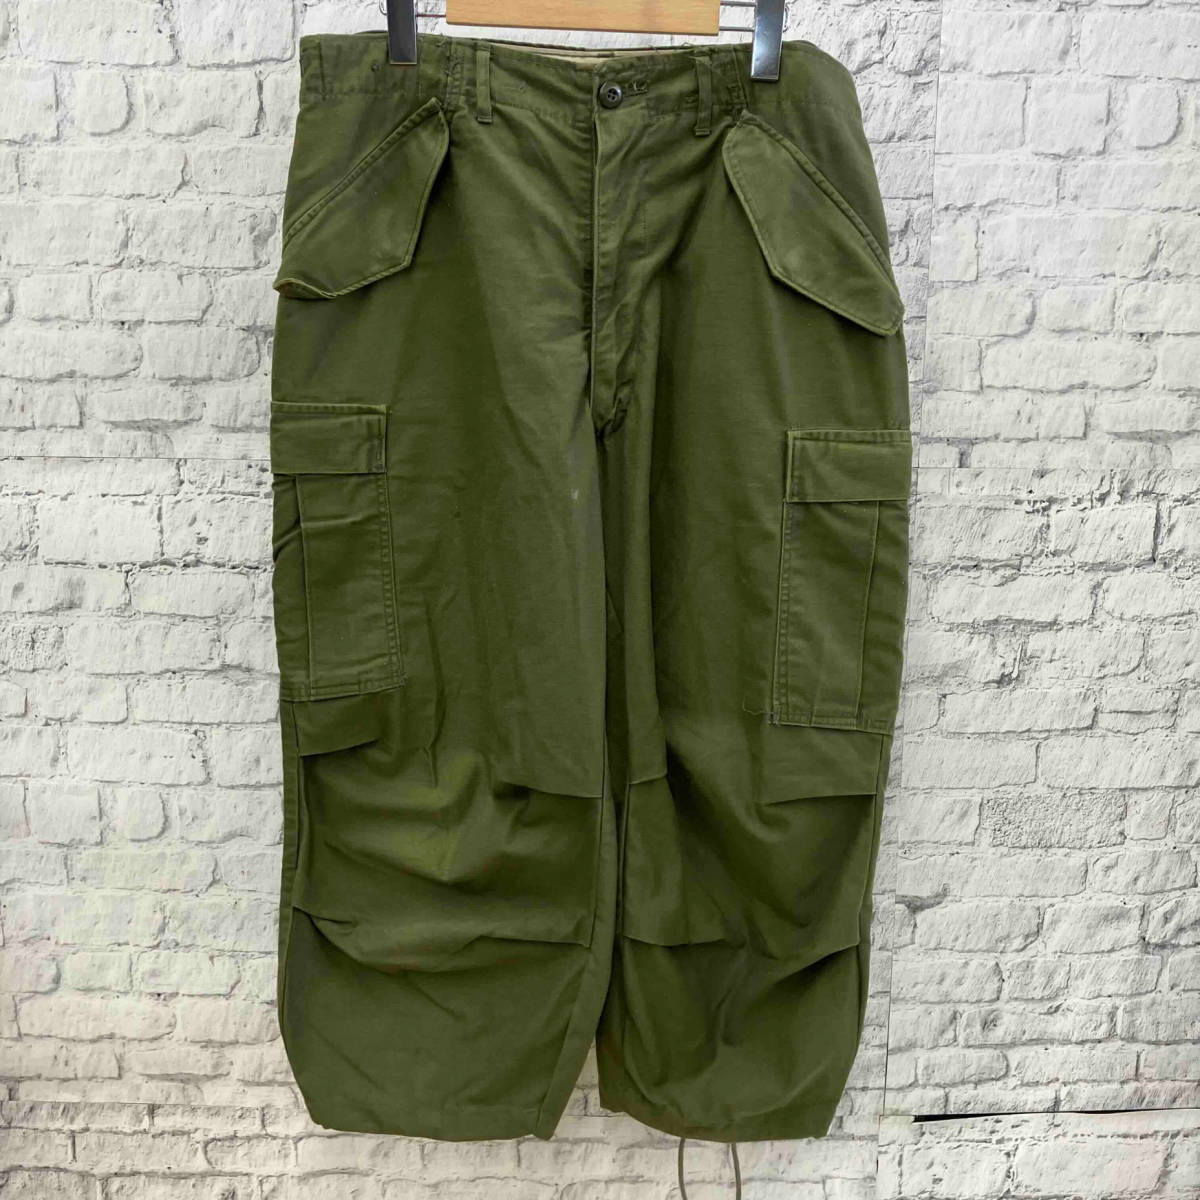 US.ARMY M-65 70s field pants cargo pants cotton khaki 8415-782-2954 size M